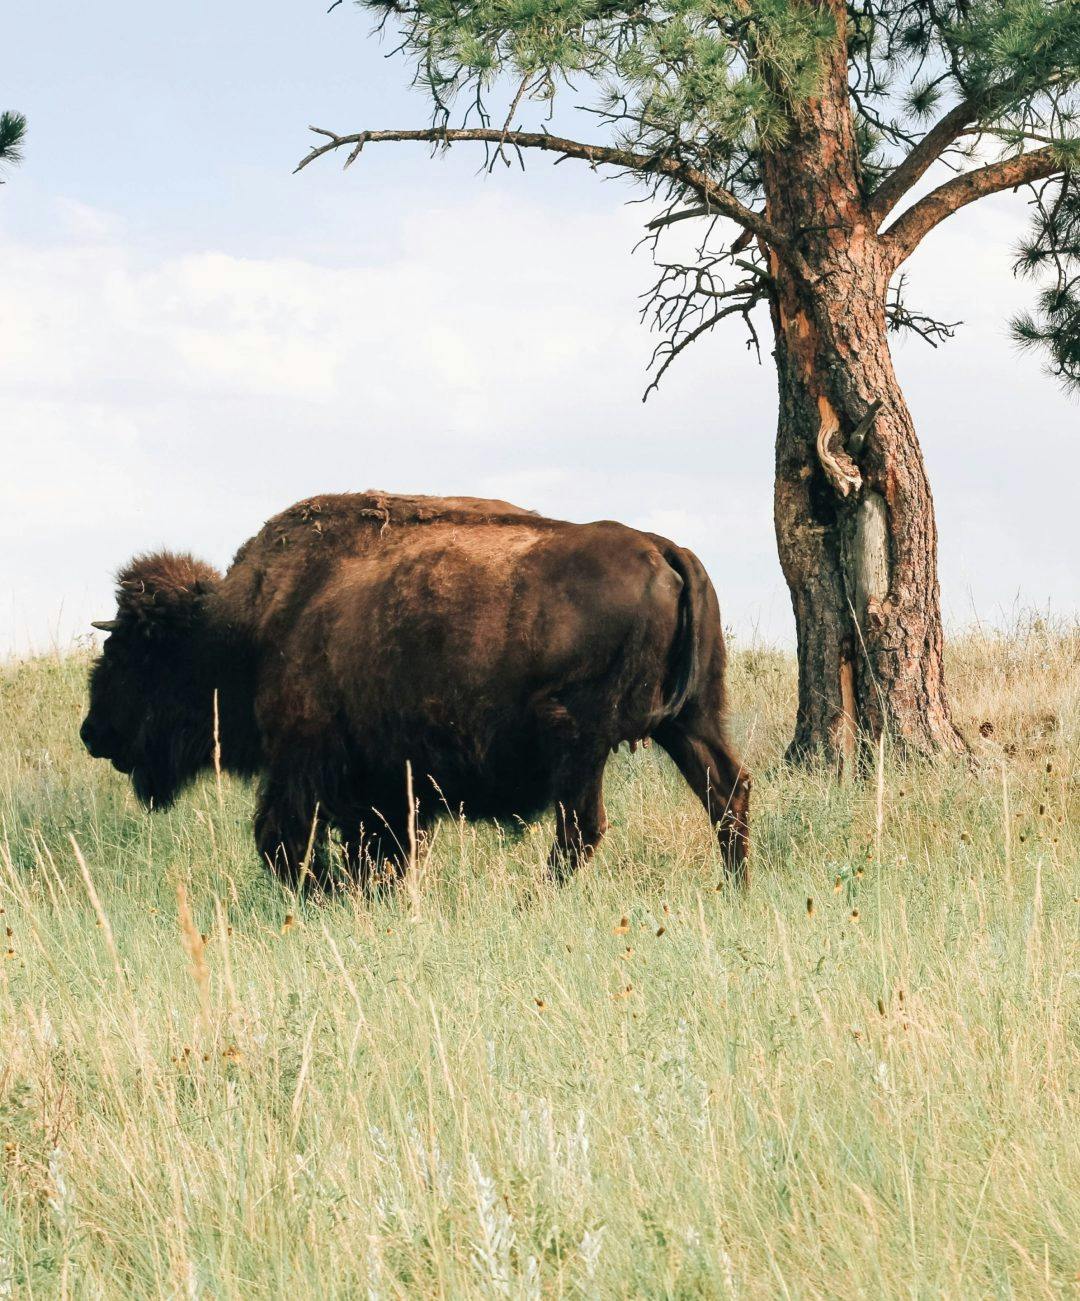 A bison in Bismarck